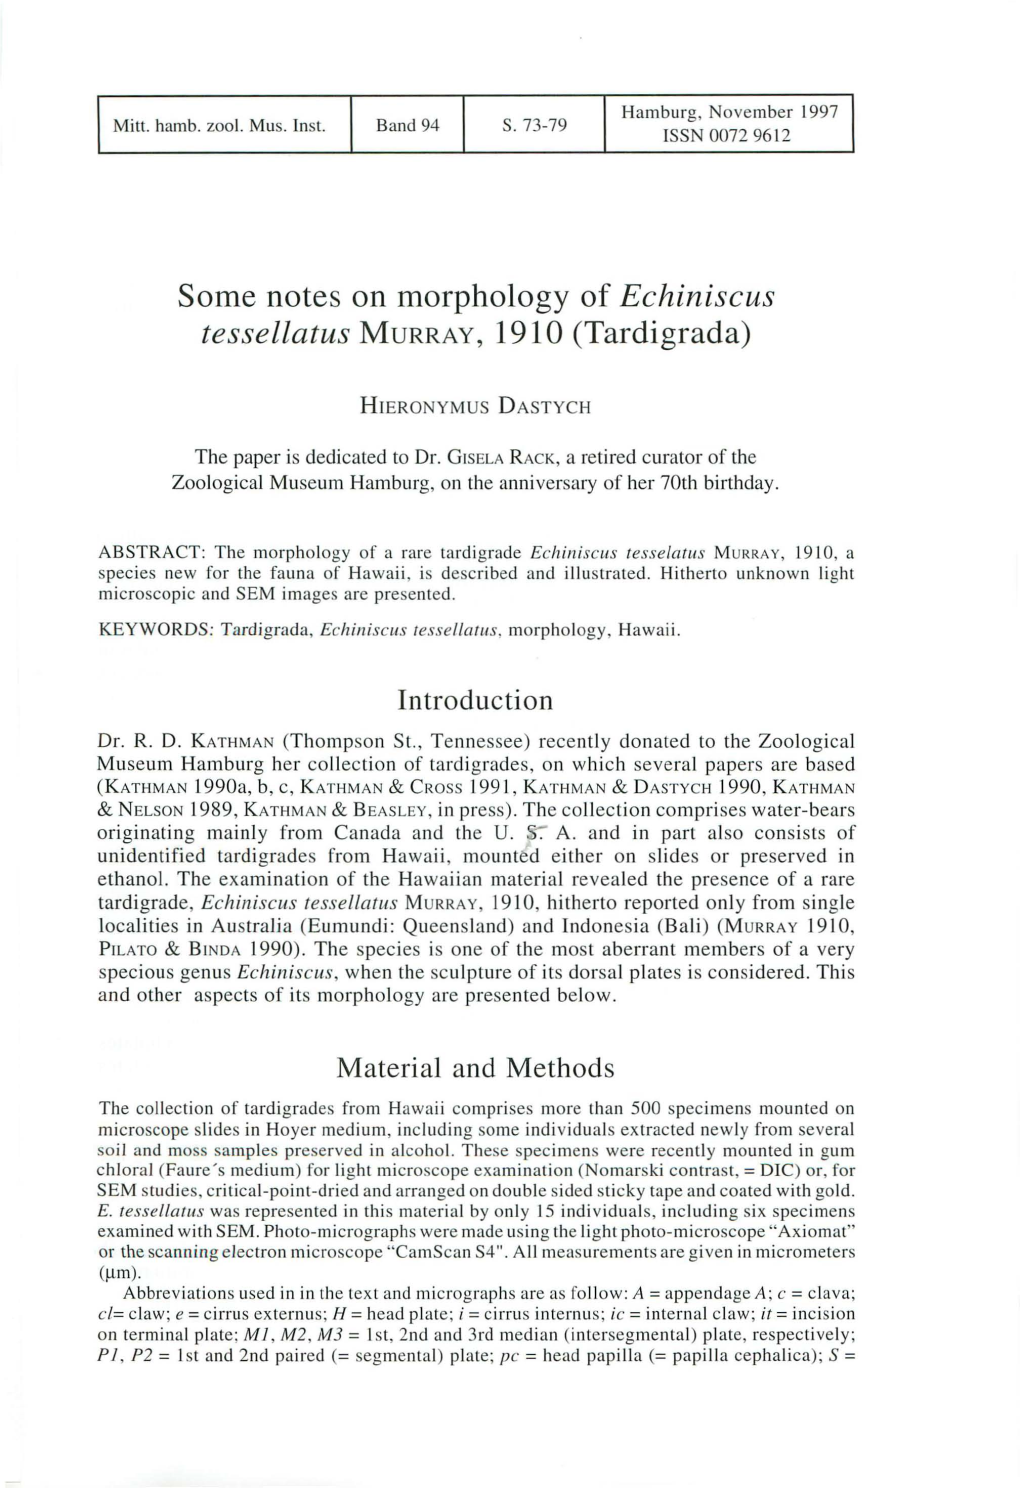 Some Notes on Morphology of Echiniscus Tessellatus MURRAY, 1910 (Tardigrada)